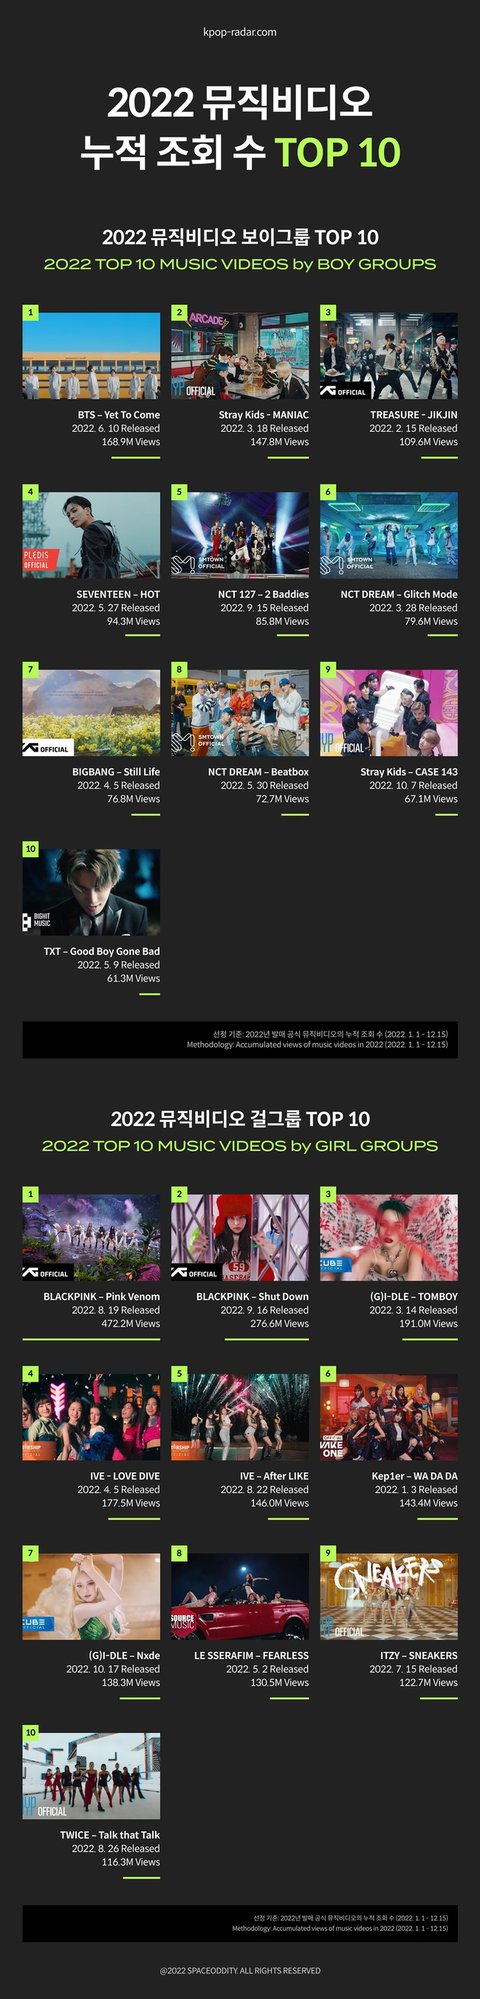 Idol groups music video views ranking in 2022